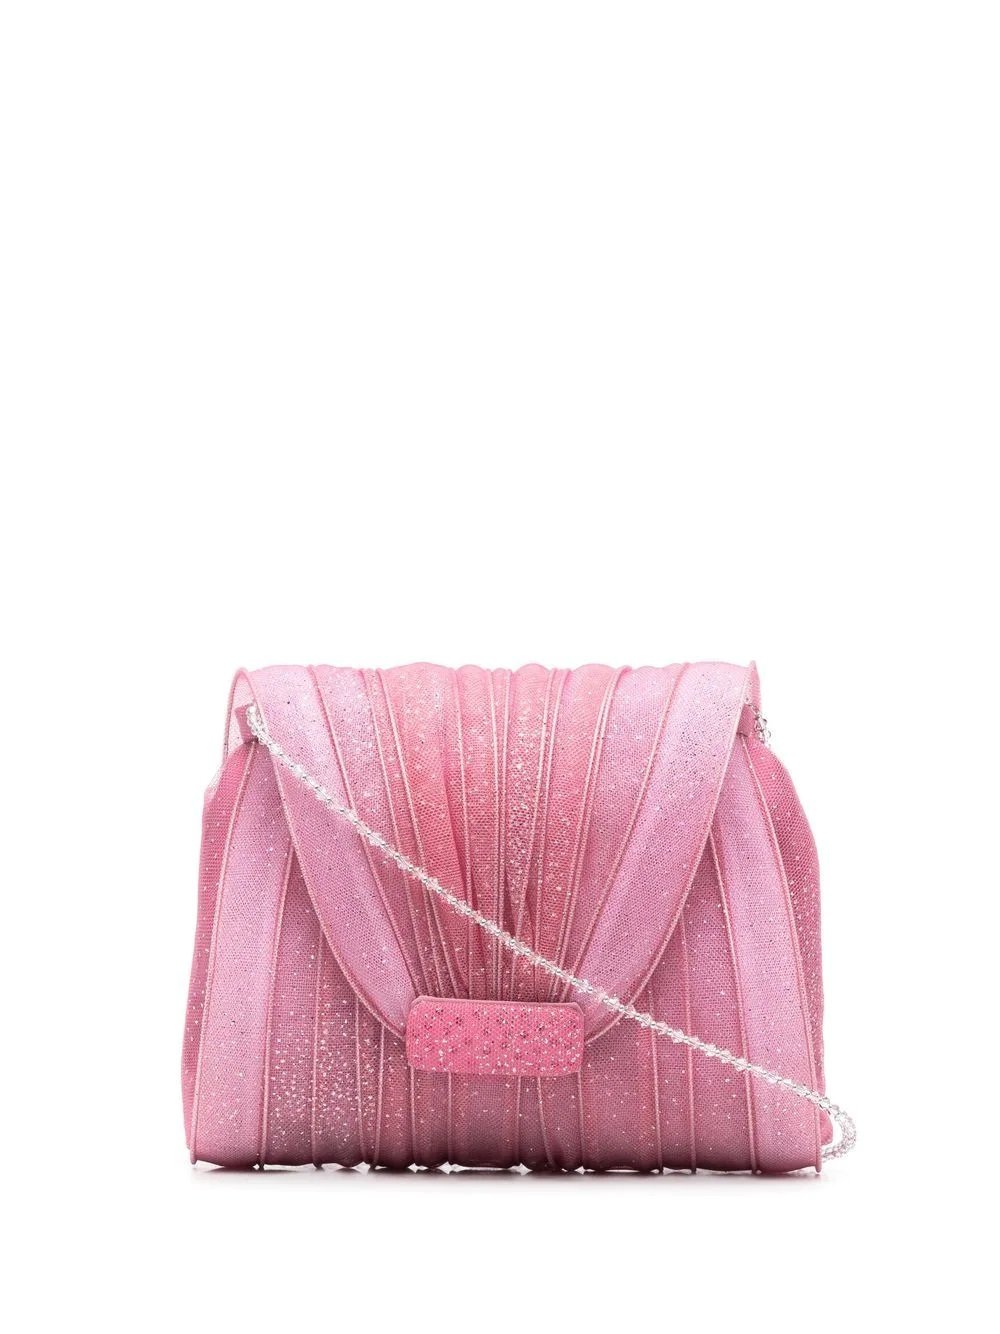 Giorgio Armani Privé Starlit-Sky Tulle Evening Clutch Bag in Pink.jpg